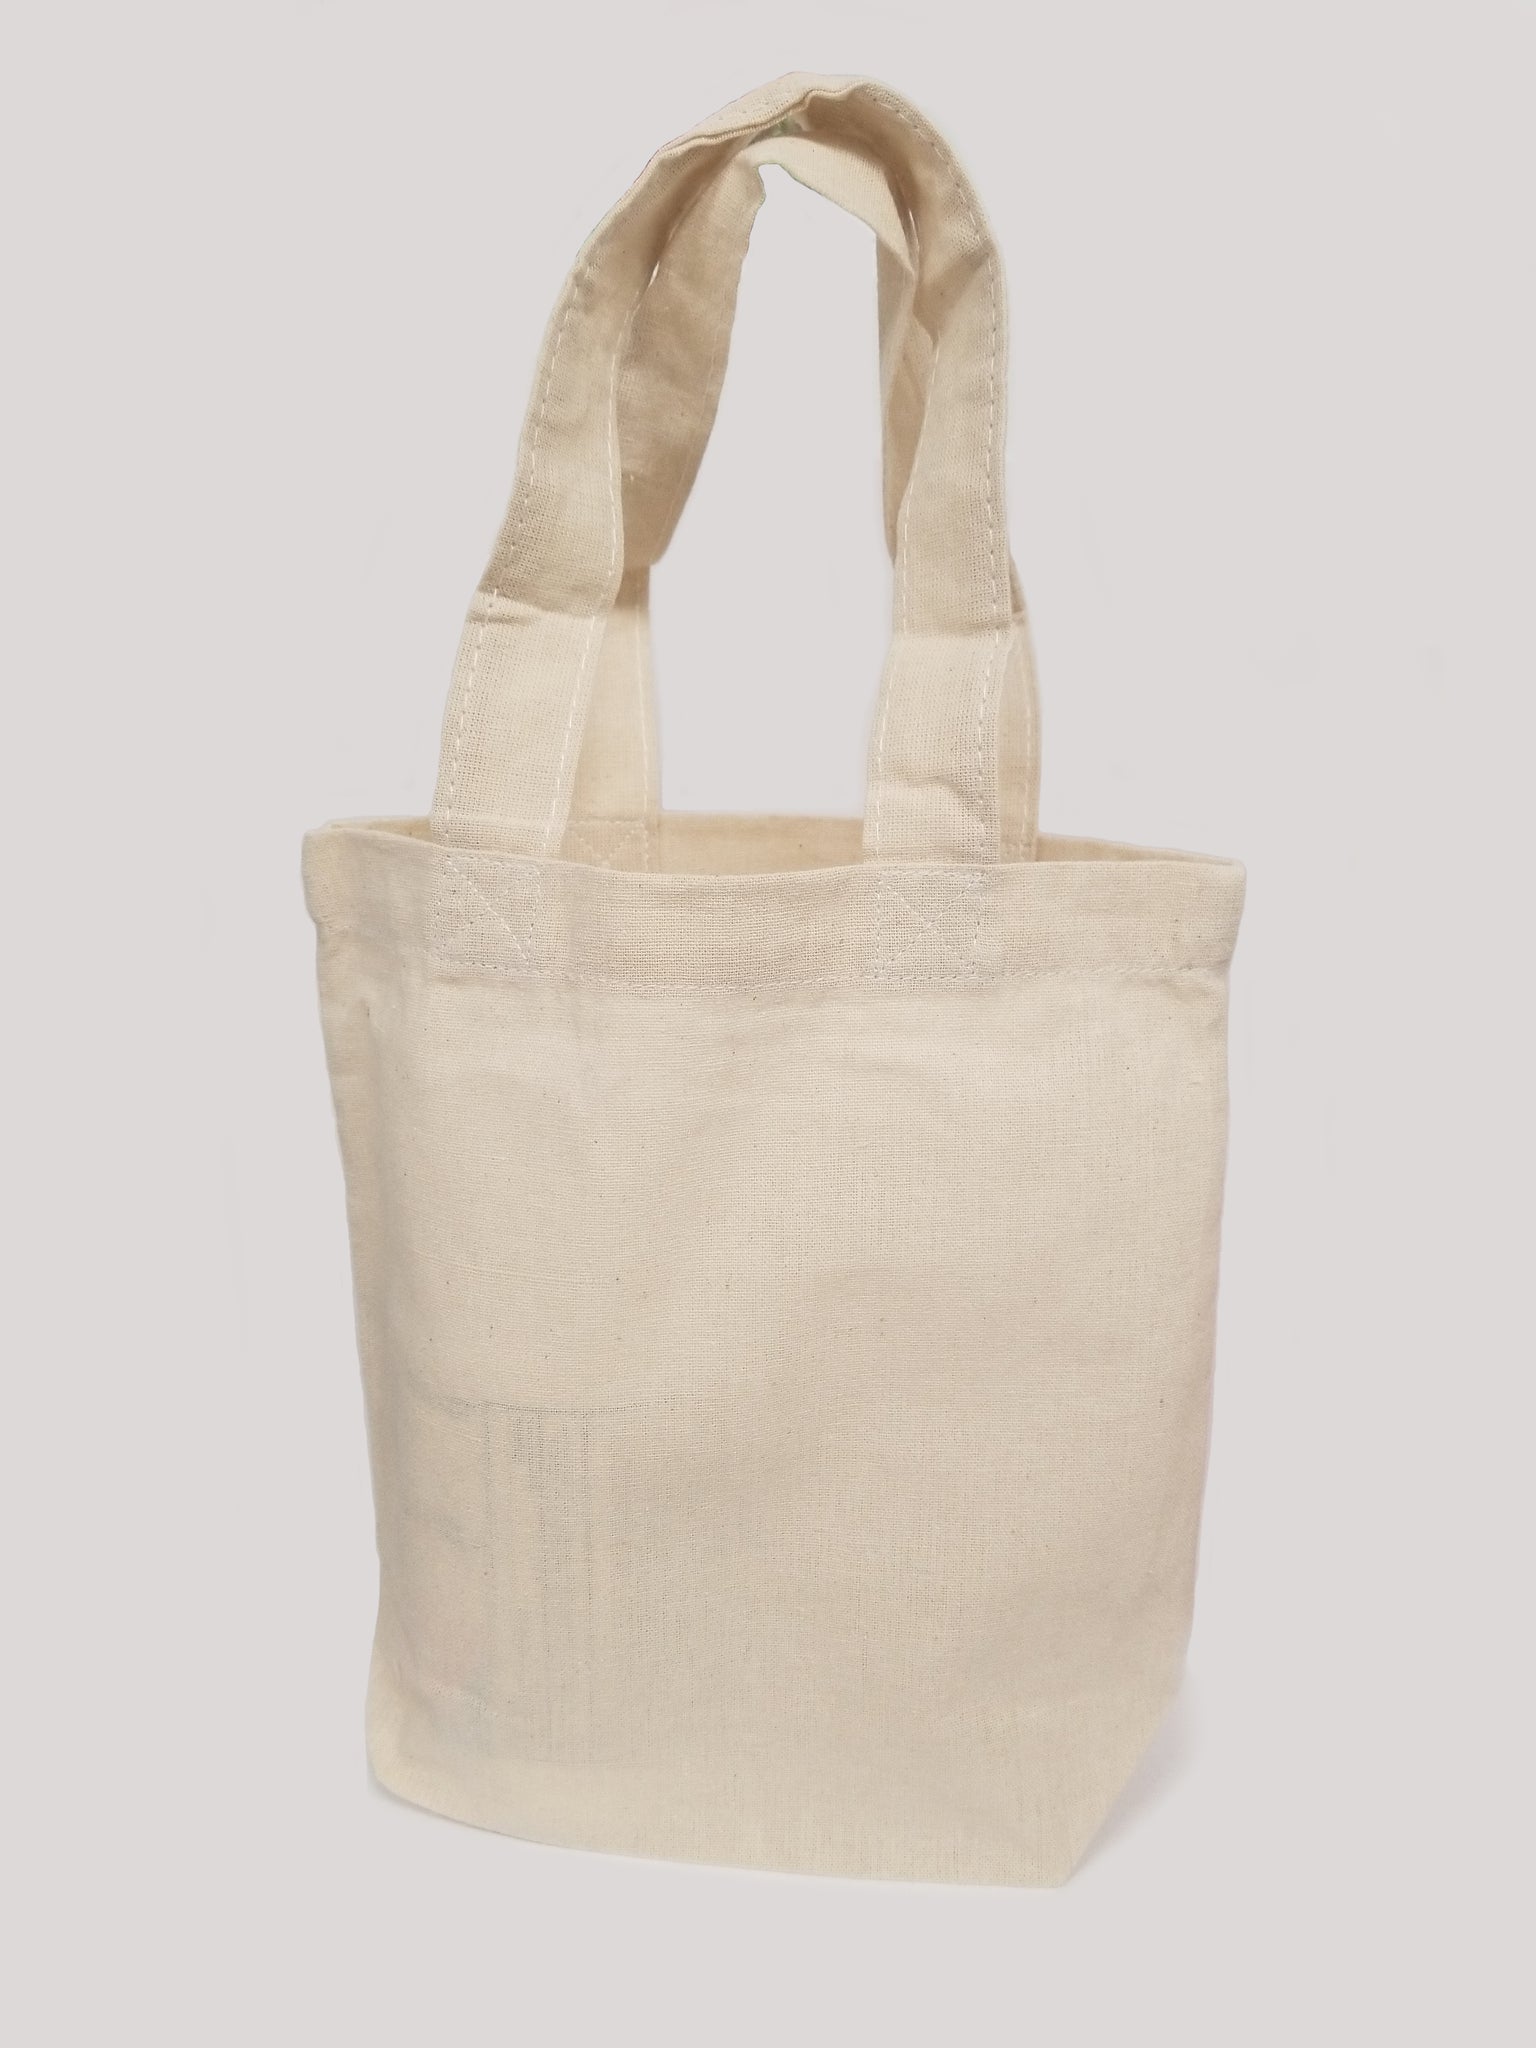 50 Best Free and Premium Tote Bag Mockup PSD Templates 2020